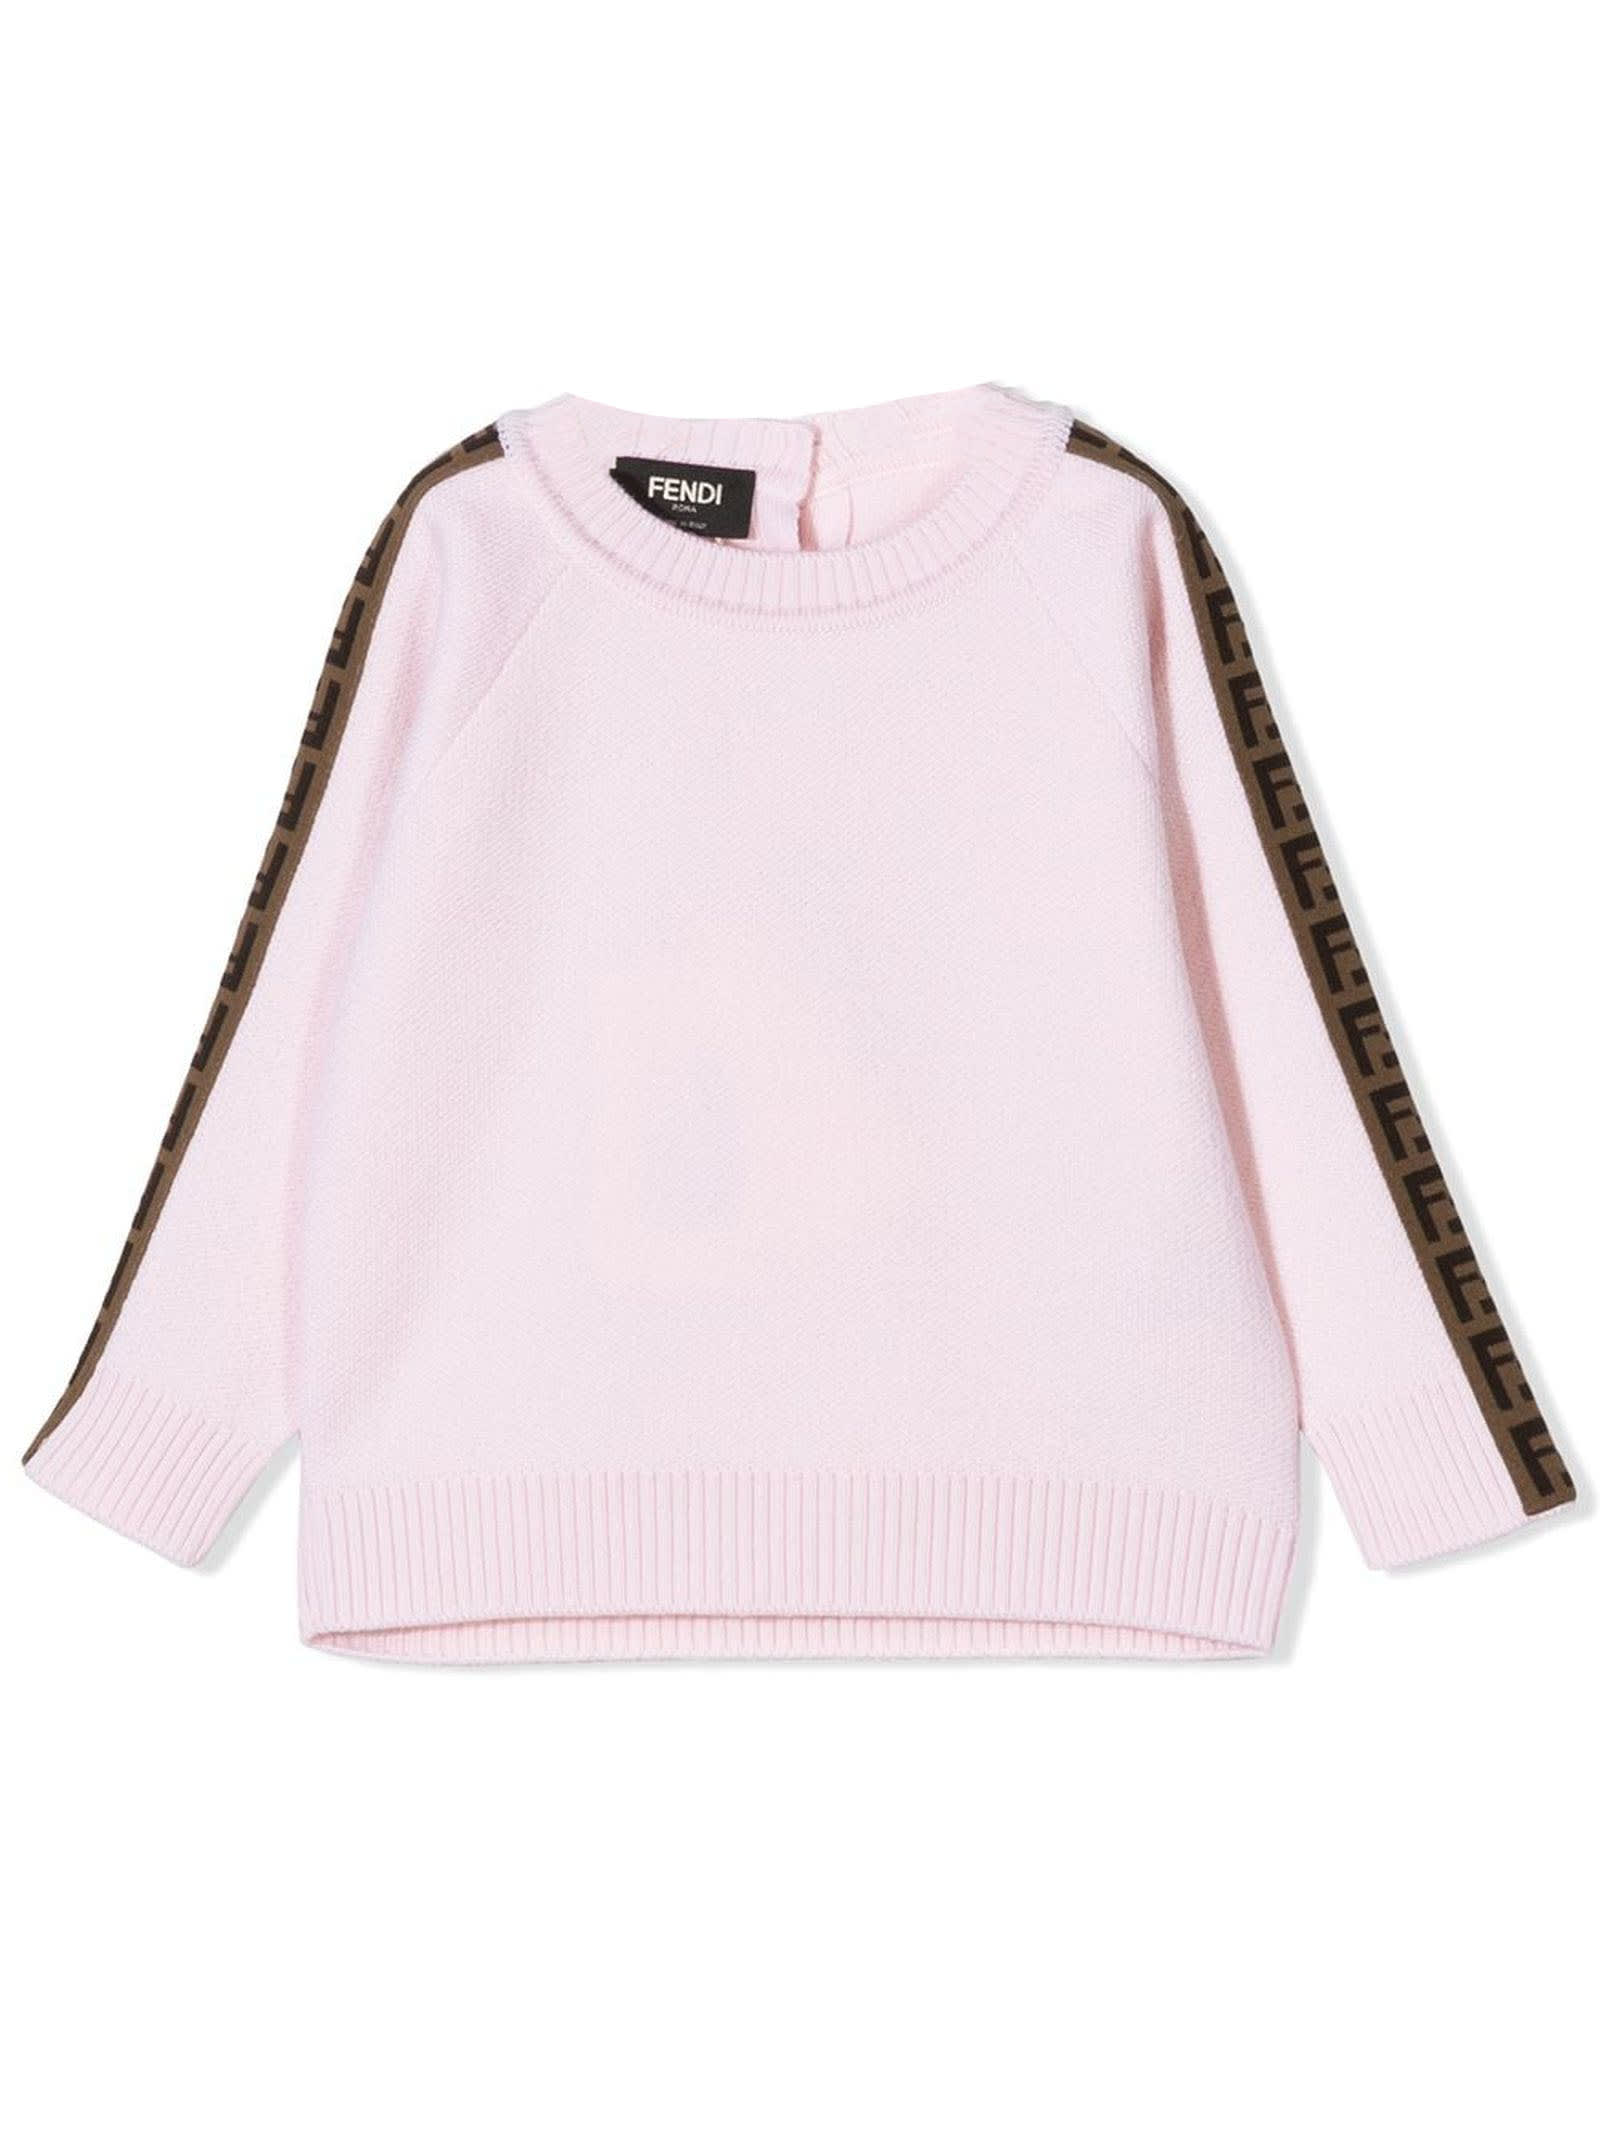 Fendi Pink Virgin Wool Sweater